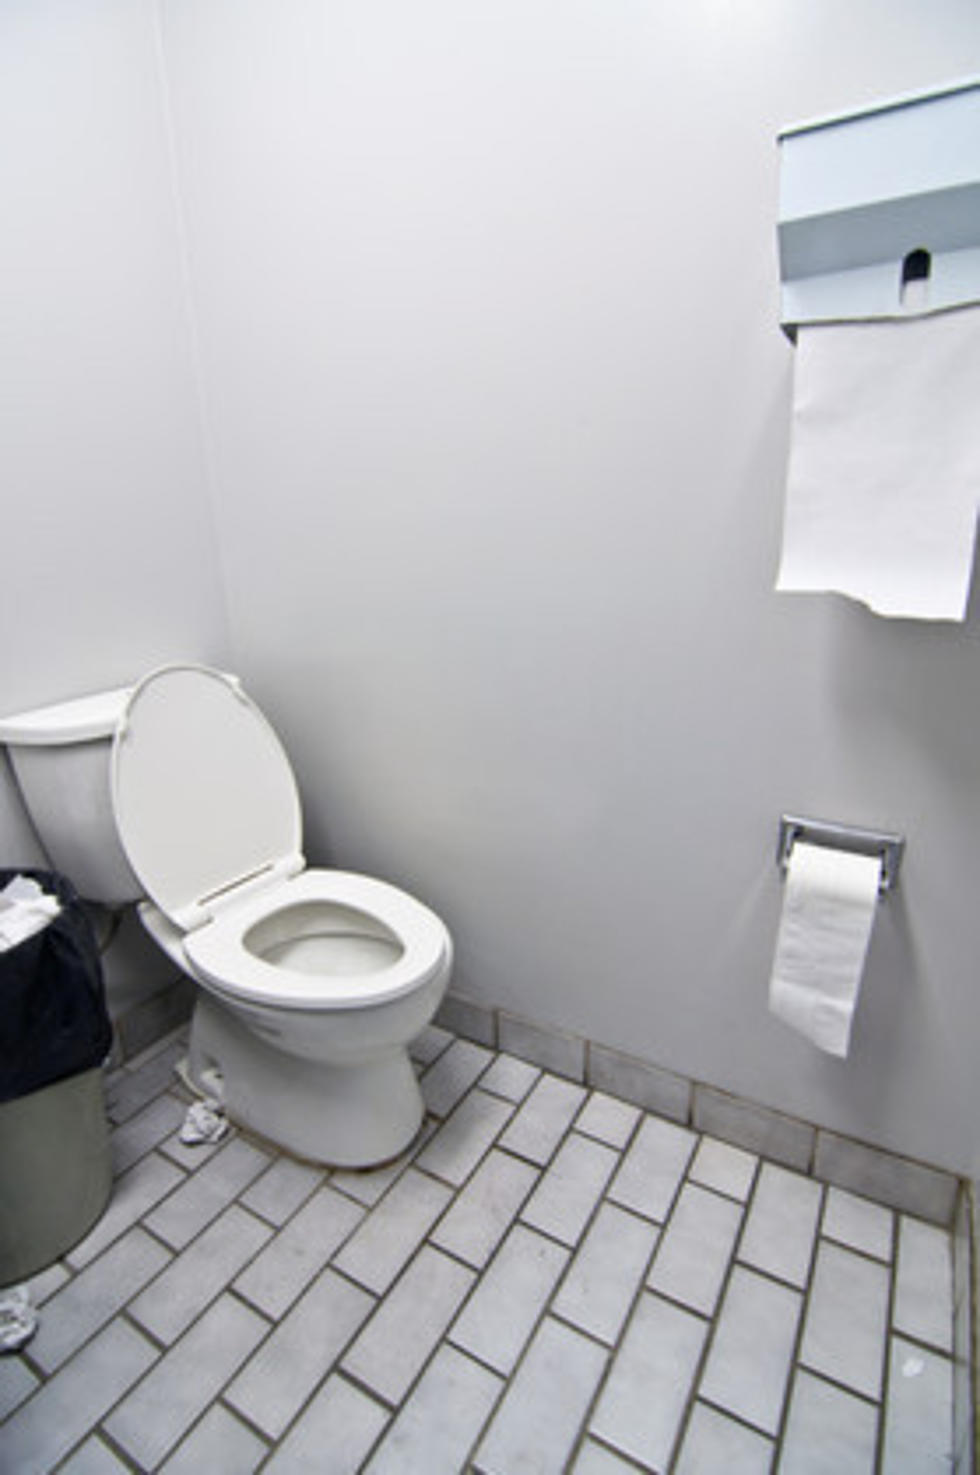 Settle the Behka Vs Boyfriendo Debate: The Toilet Paper Roll [POLL]